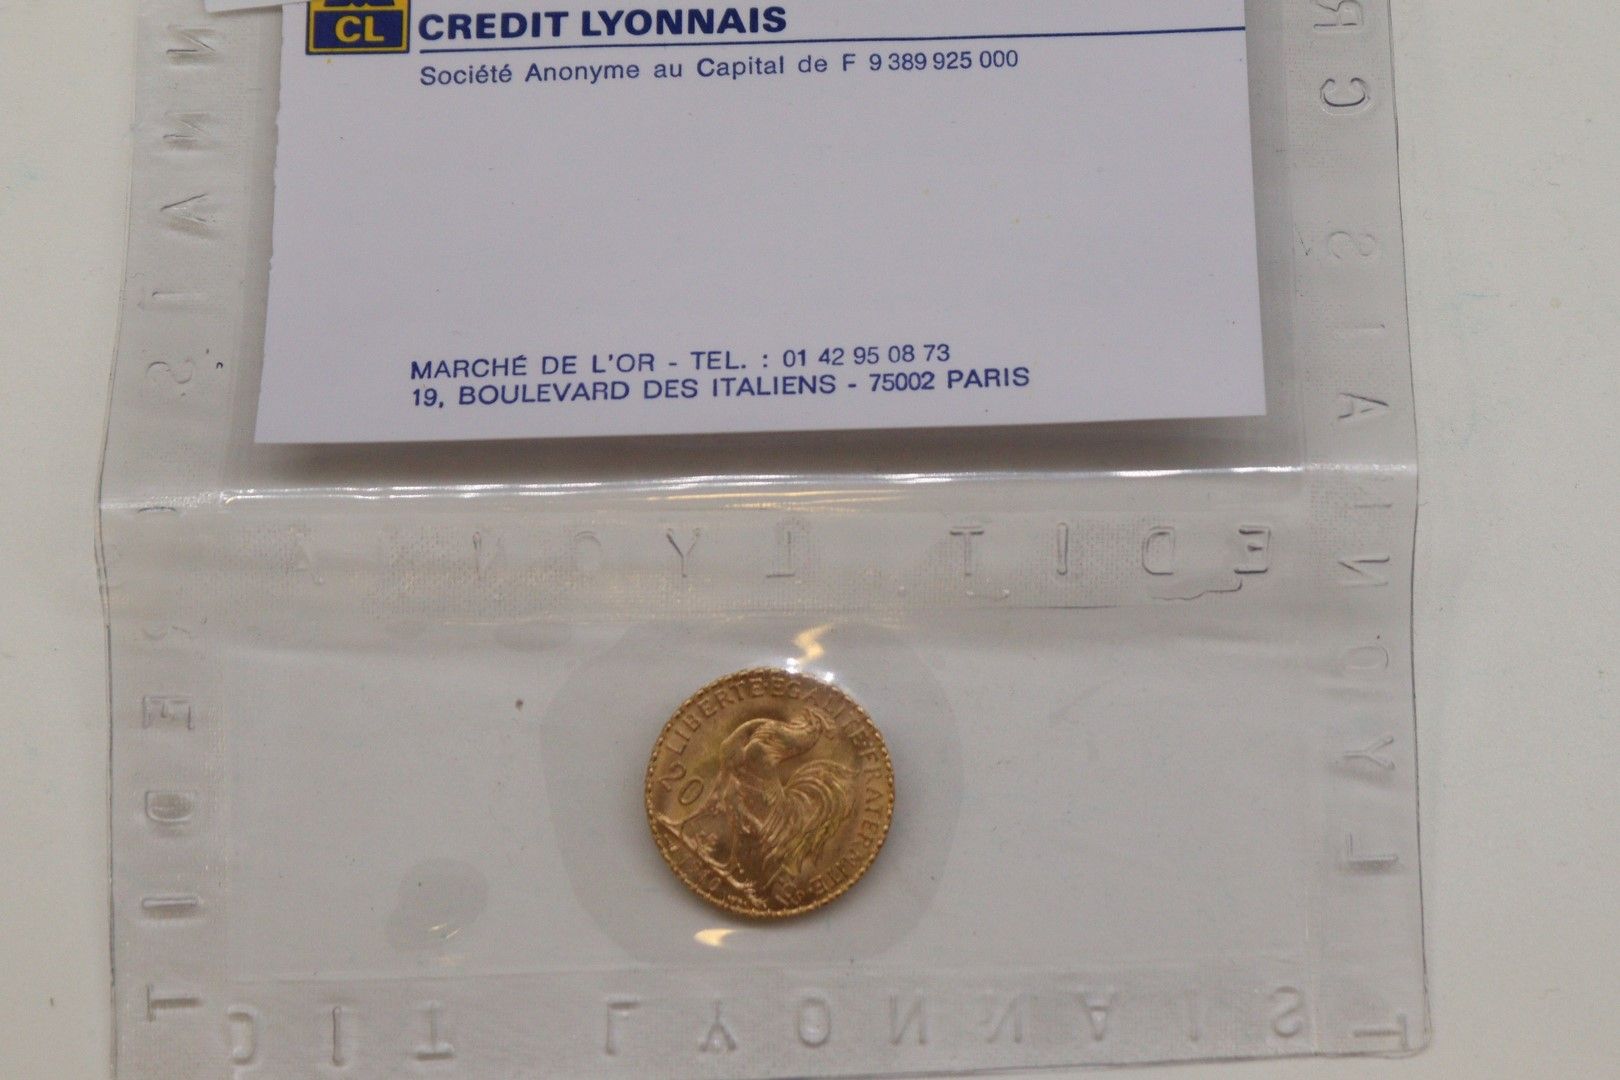 Null 1 moneda de oro de 20 francos con gallo bajo sello.

Peso : 6,45g.